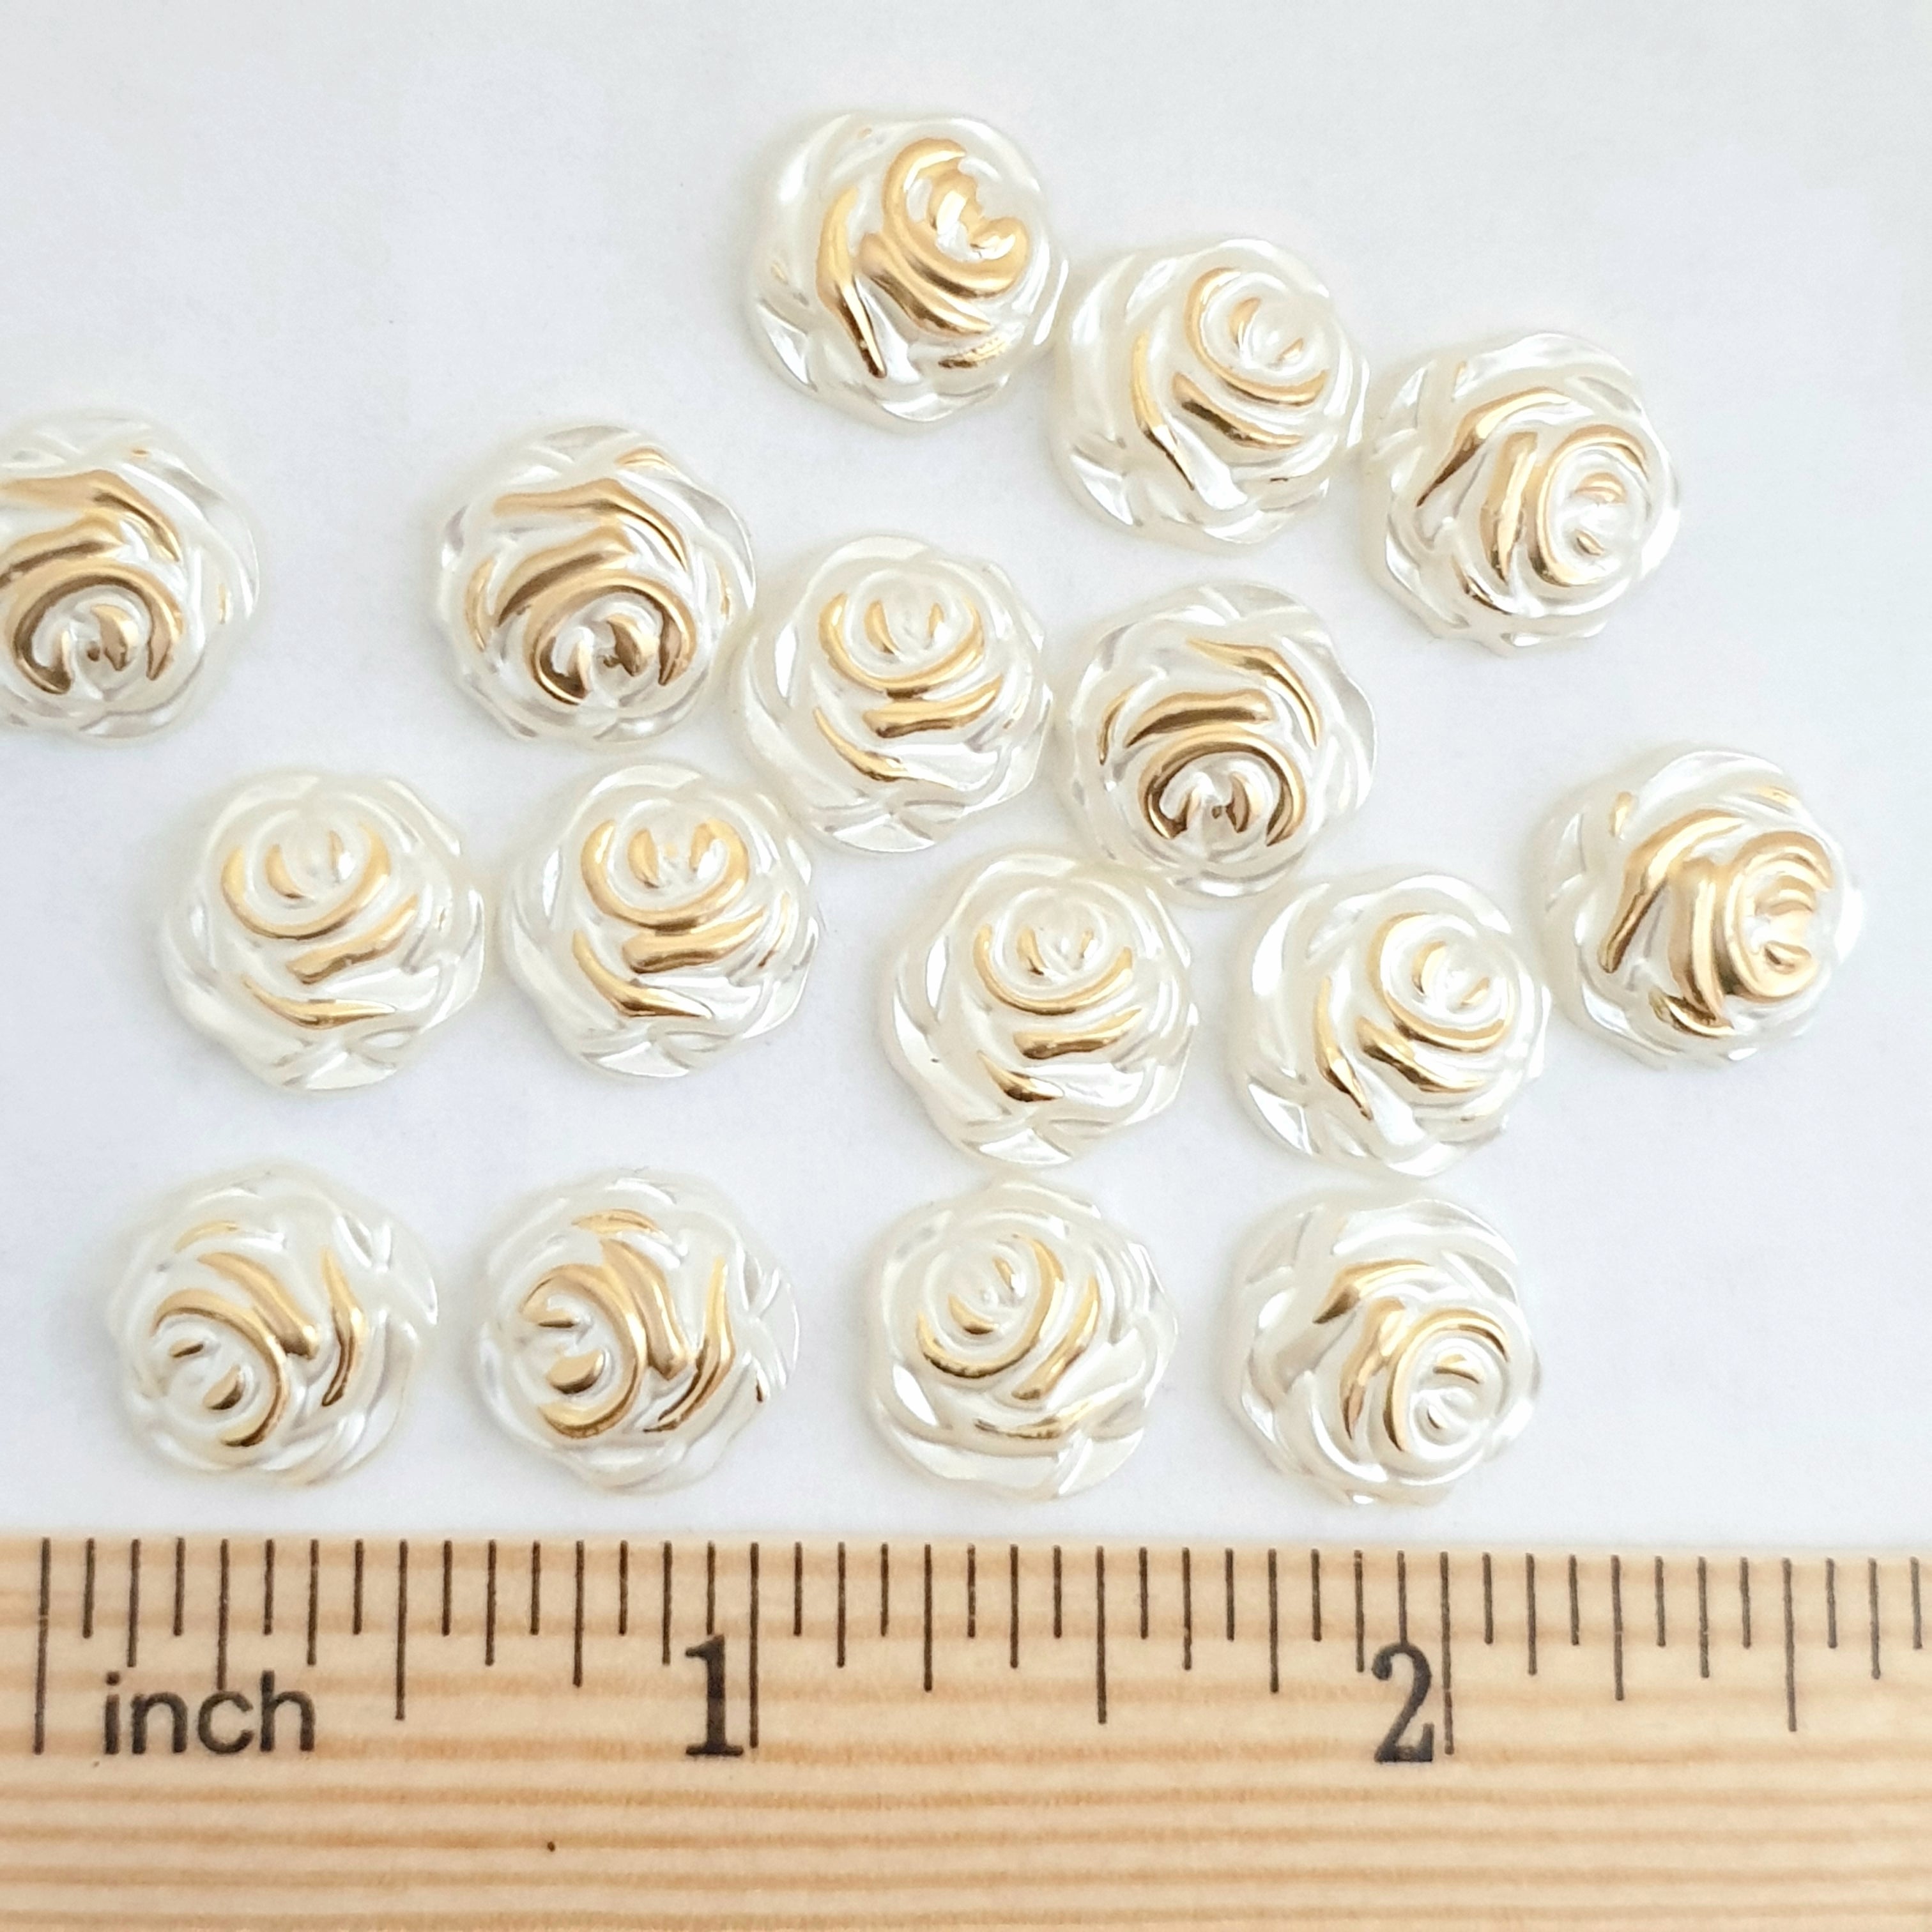 MajorCrafts 60pcs 12mm Gold Ivory Flat Back Rose Flower Resin Pearls